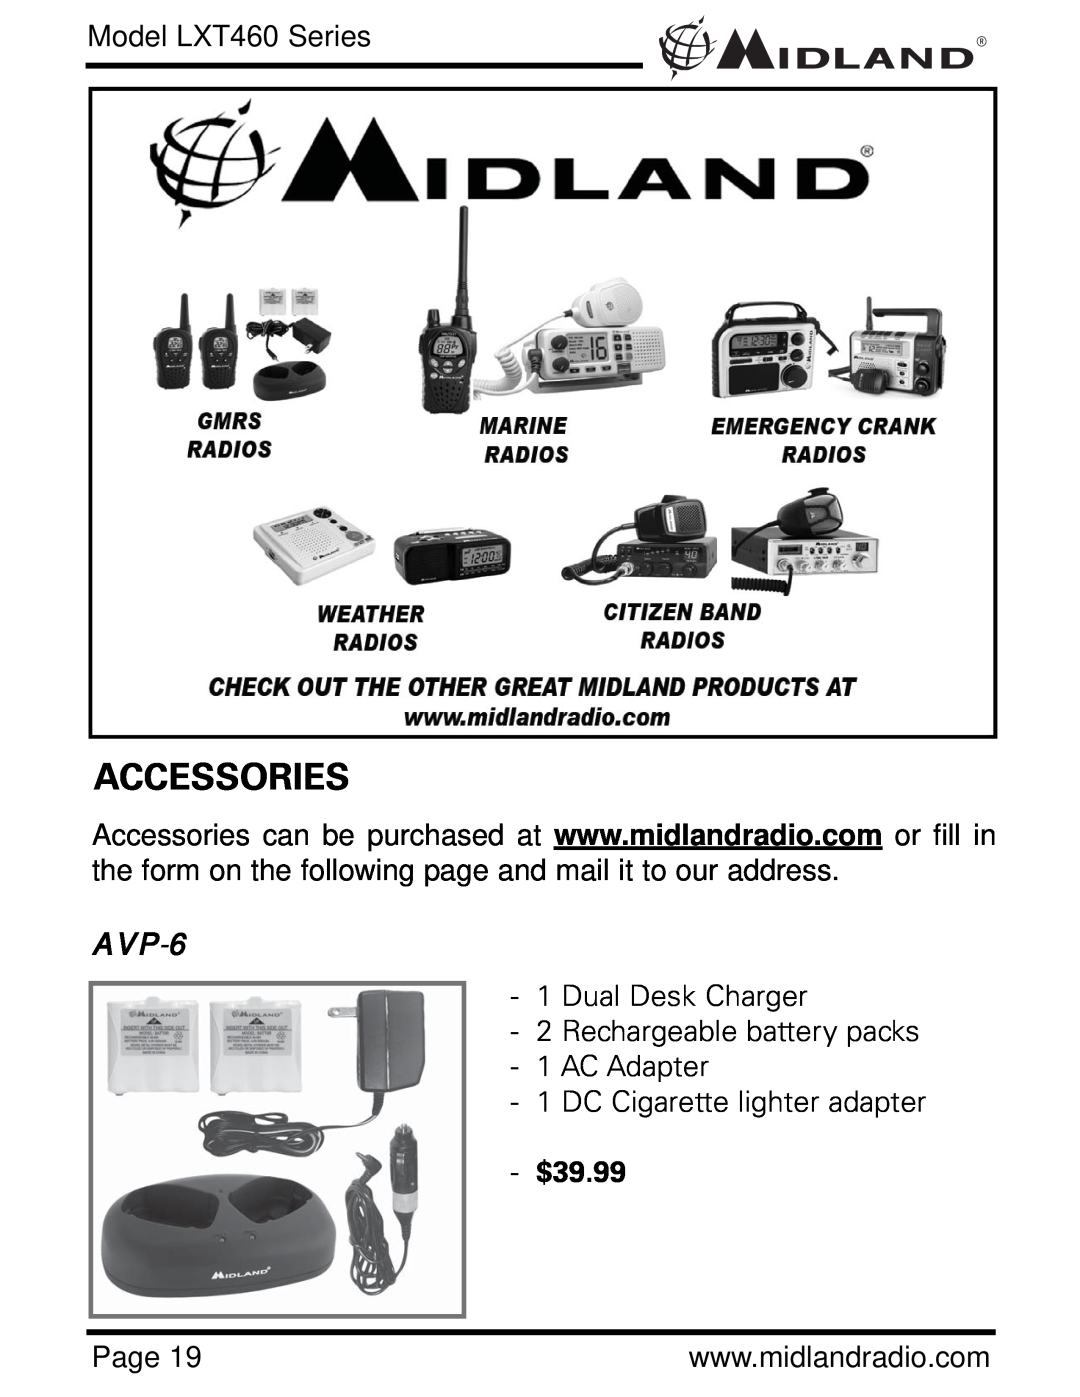 Midland Radio owner manual Accessories, AVP-6, $39.99, Model LXT460 Series 